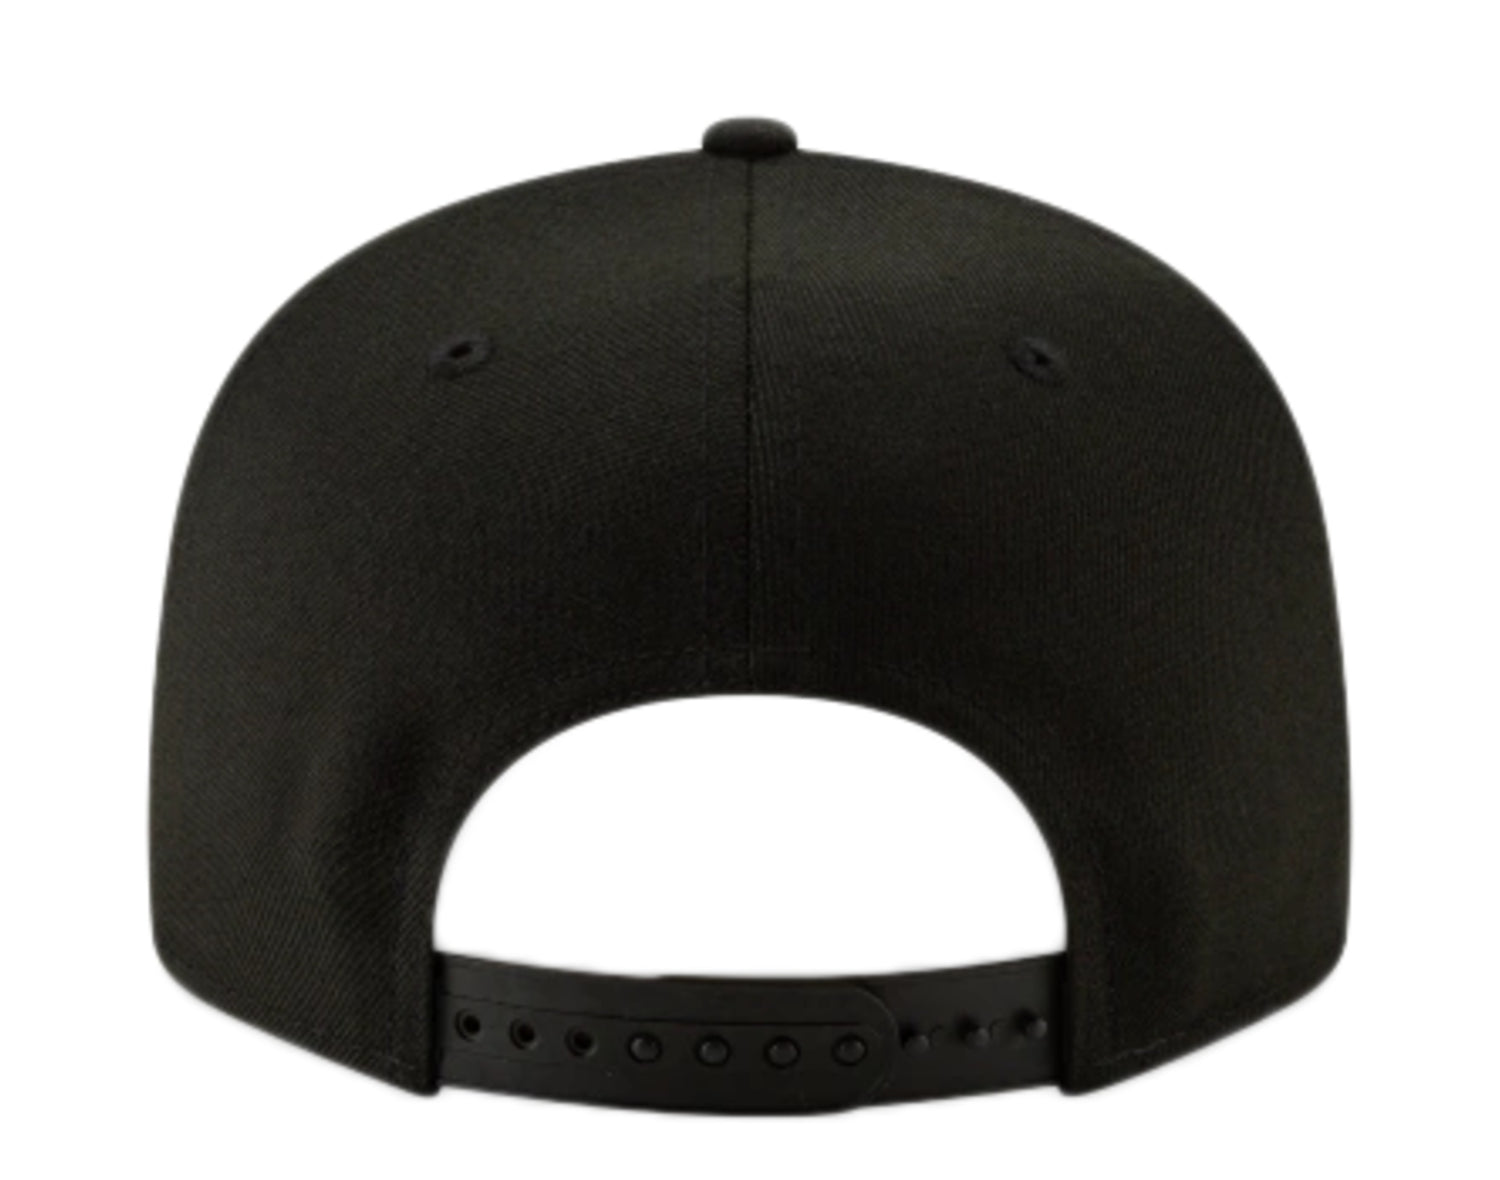 New Era 9Fifty MLB Miami Marlins Basic Snapback Hat